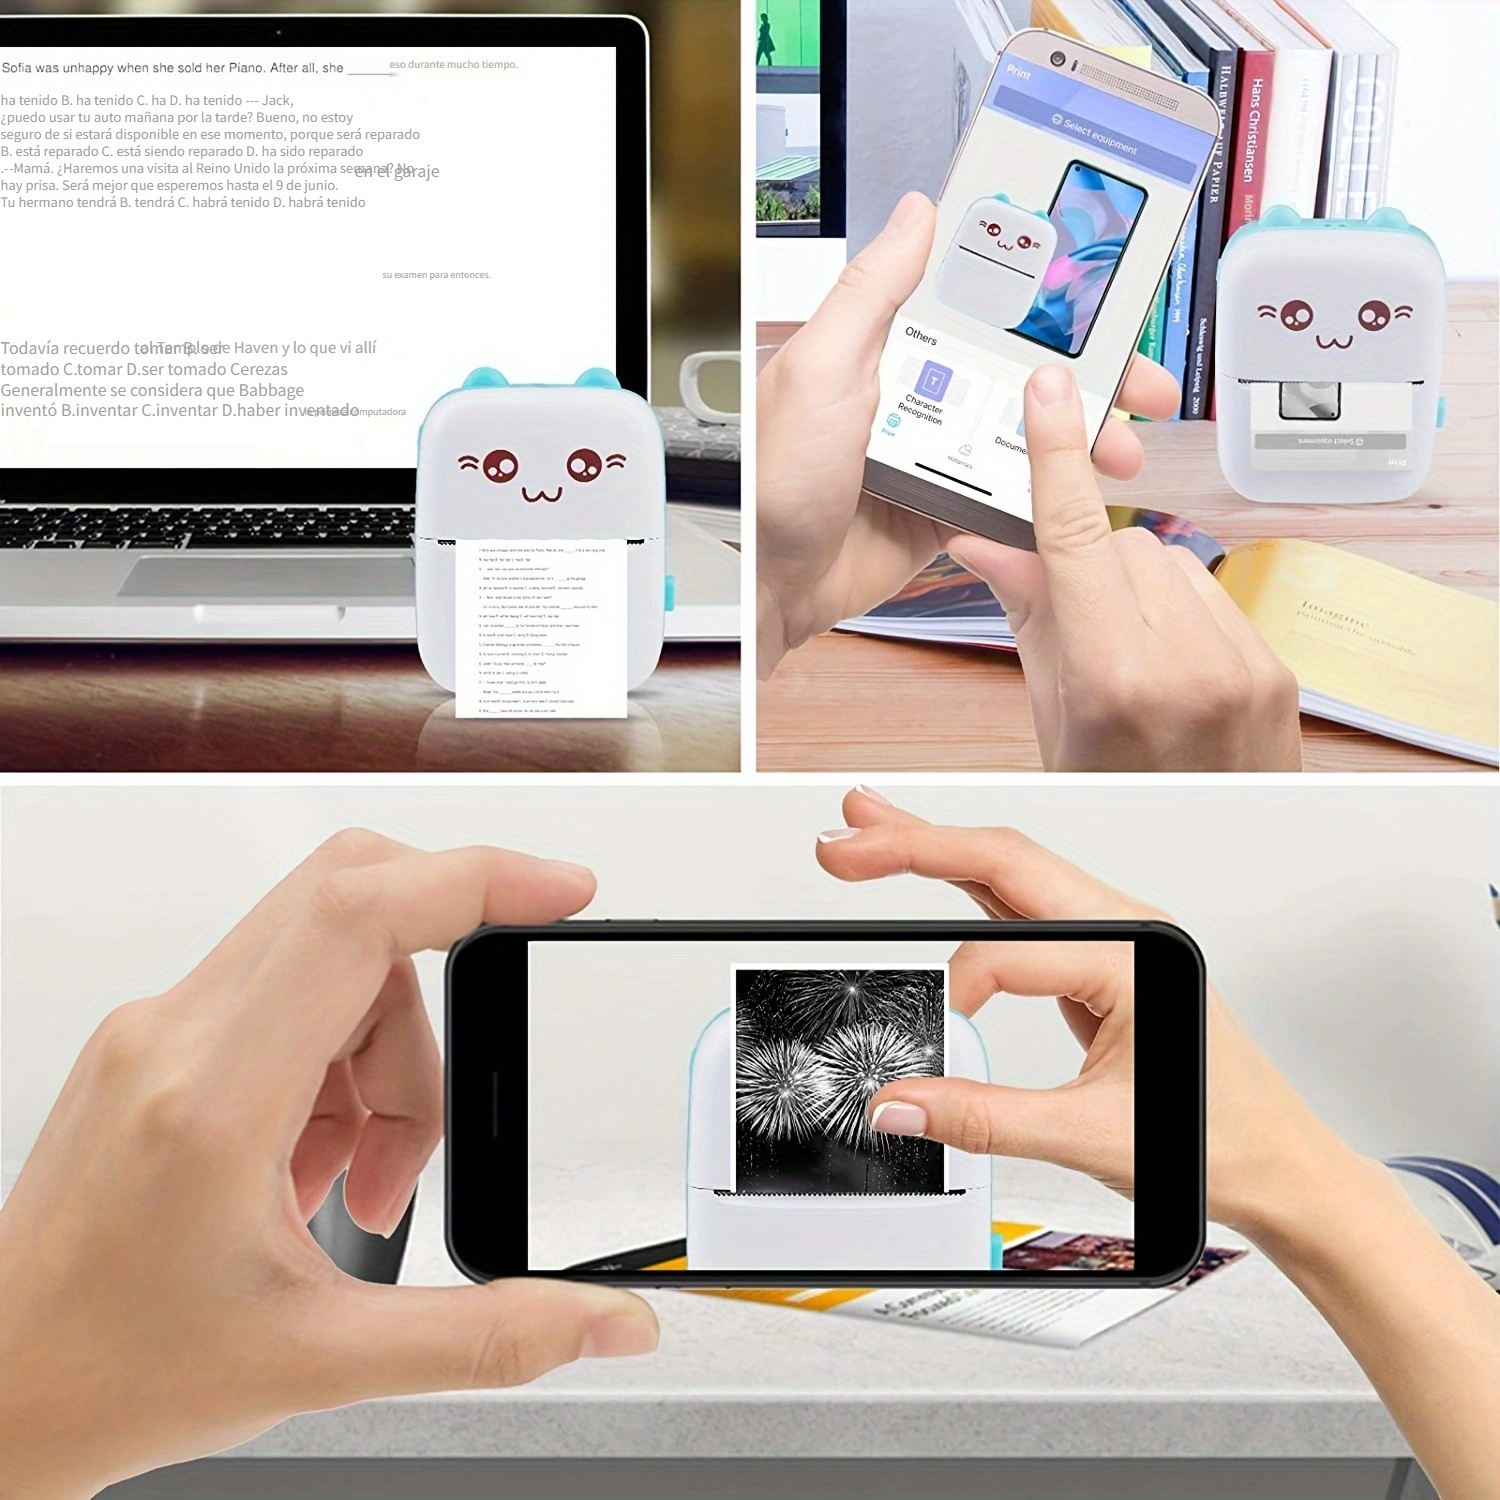 Mini impresora portátil, impresión térmica de bolsillo con 7 rollos de  papel, impresora inteligente inalámbrica Bluetooth para teléfono  inteligente